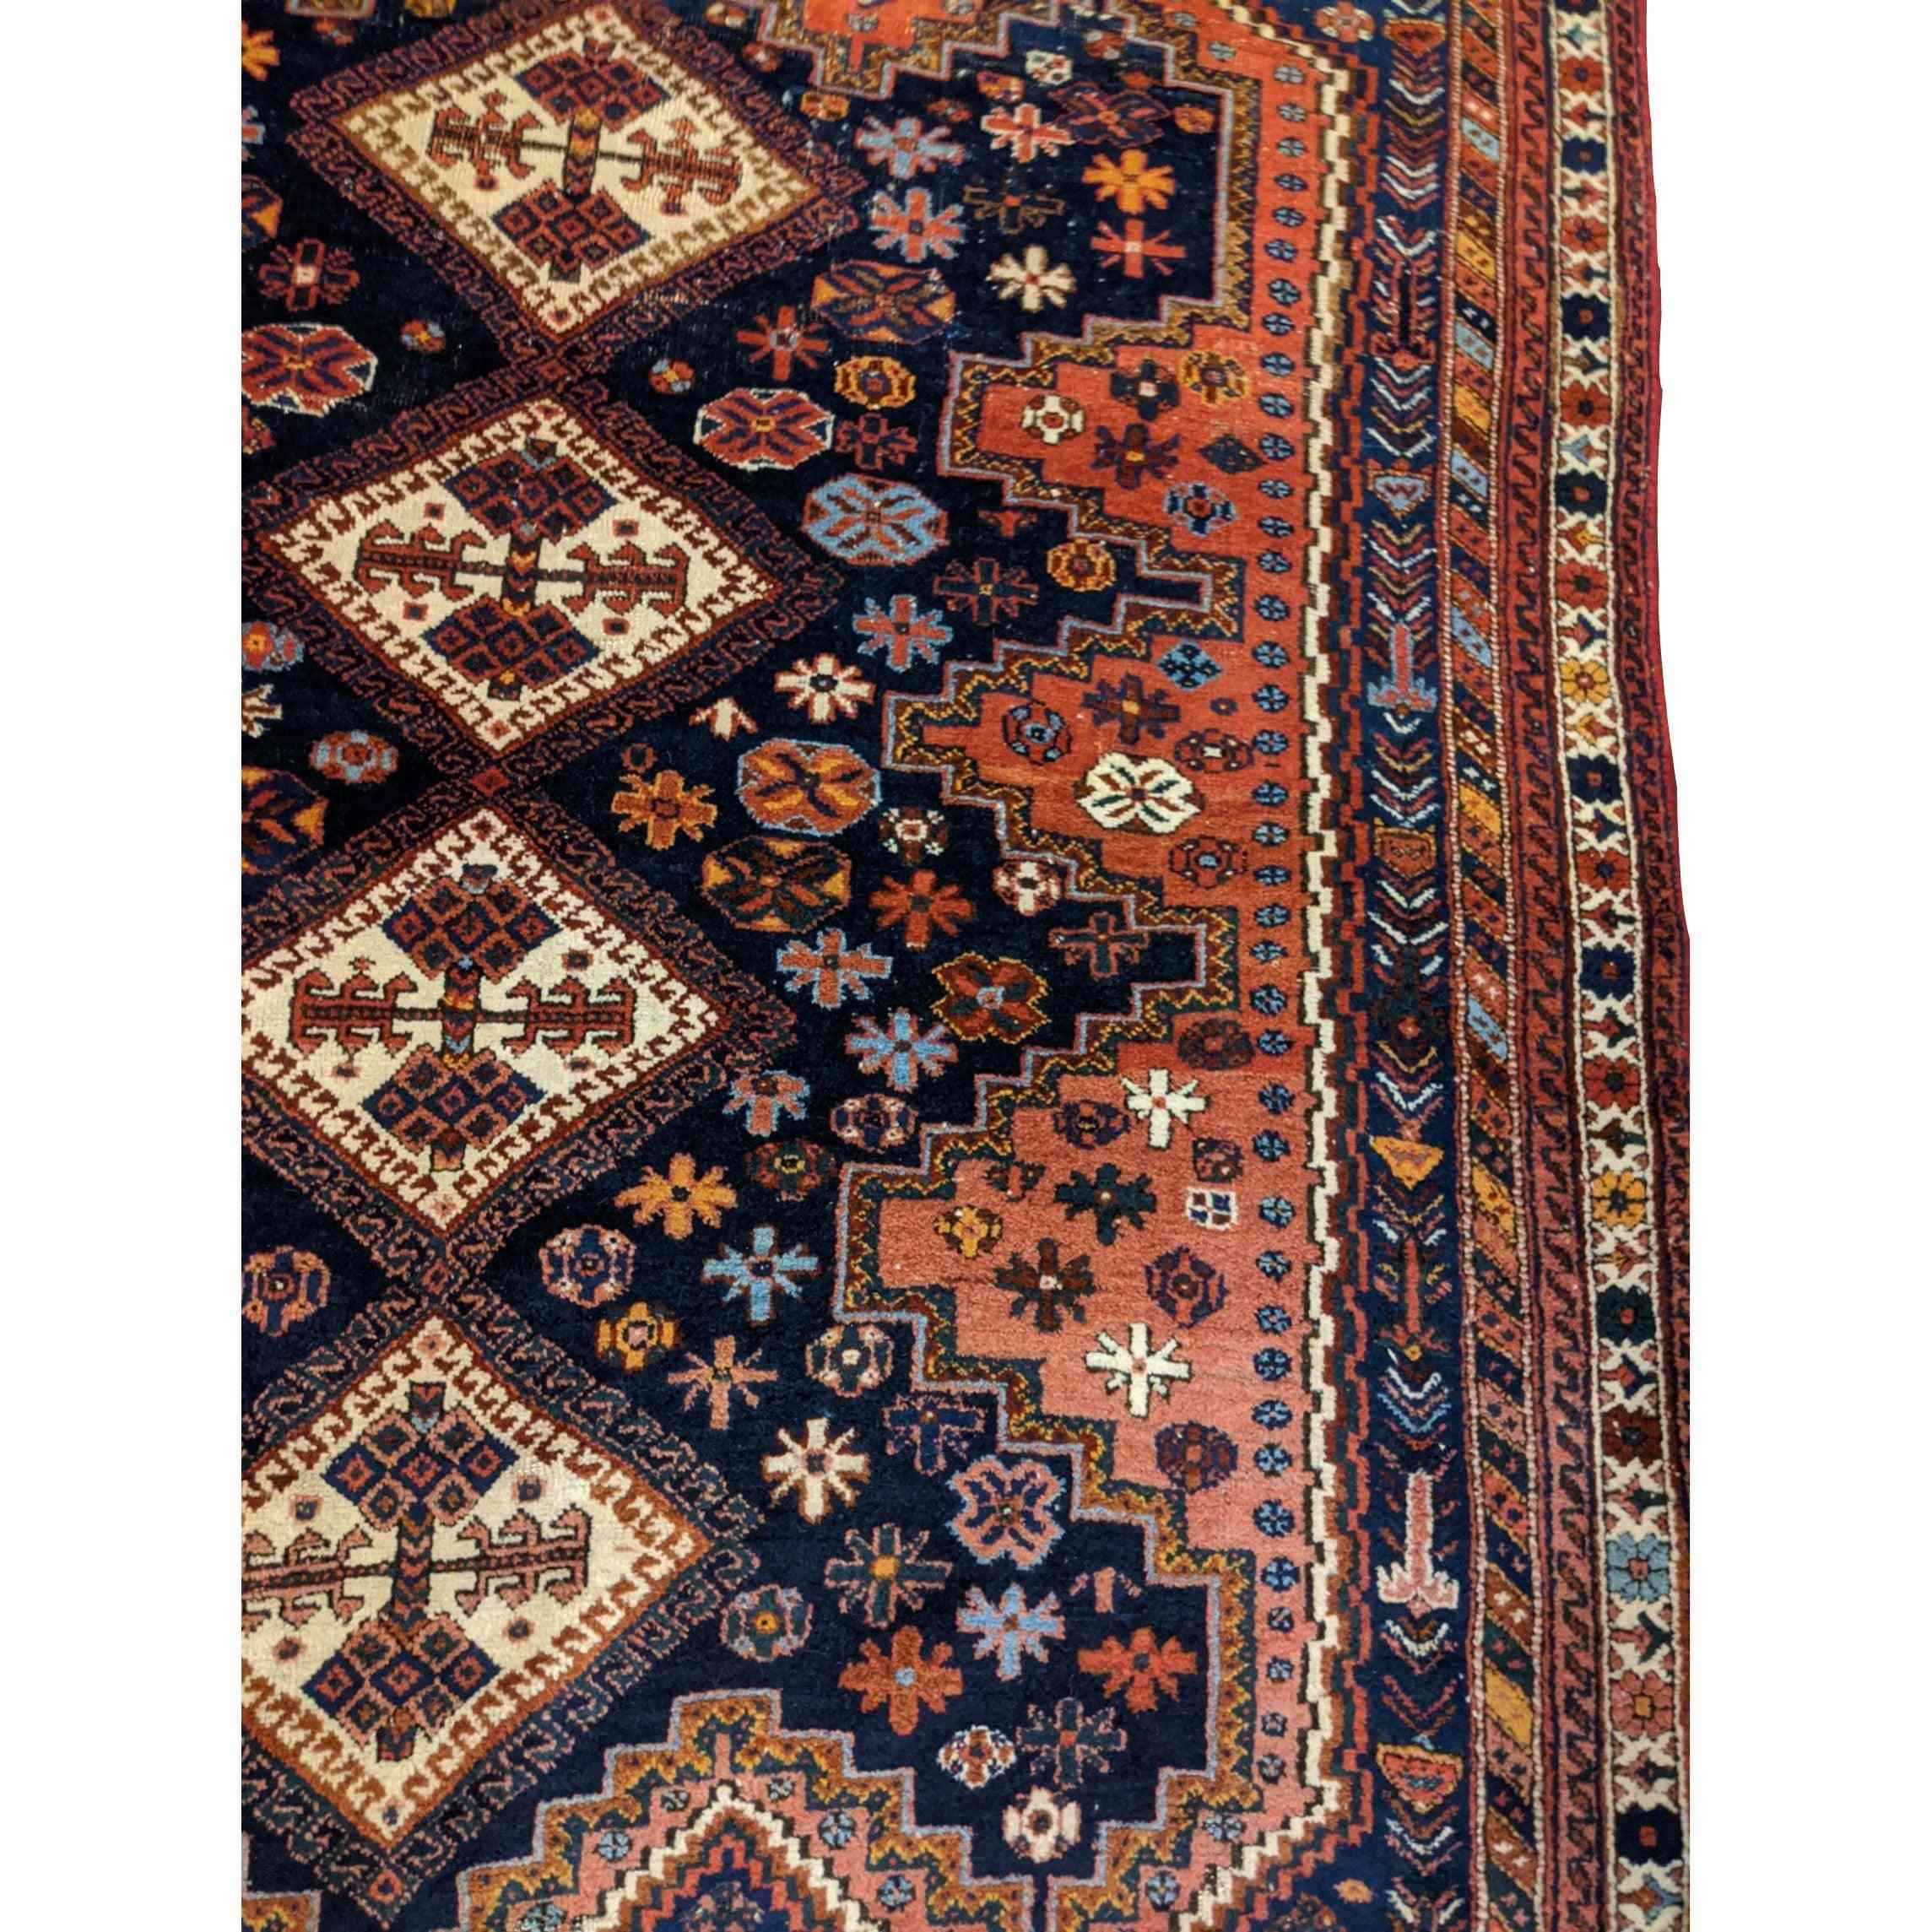 180 x 145 cm Old Qashqai Traditional Orange Rug - Rugmaster